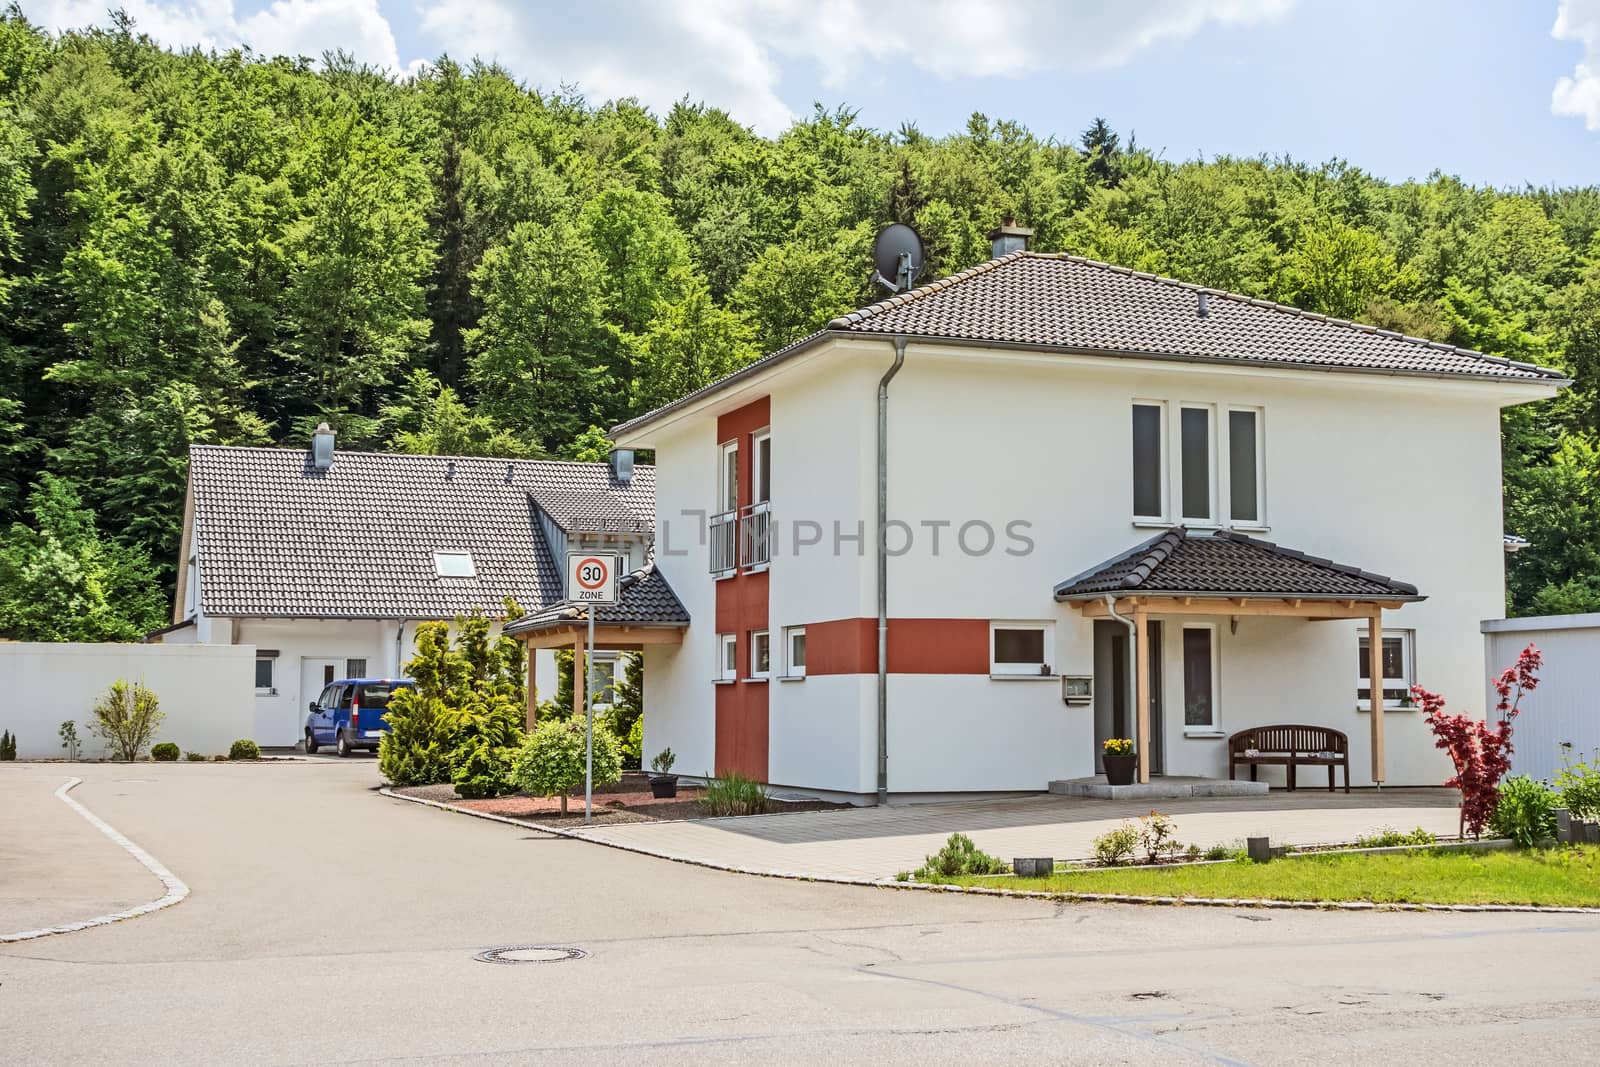 Custom built house view from the street, residential neighborhood, Germany